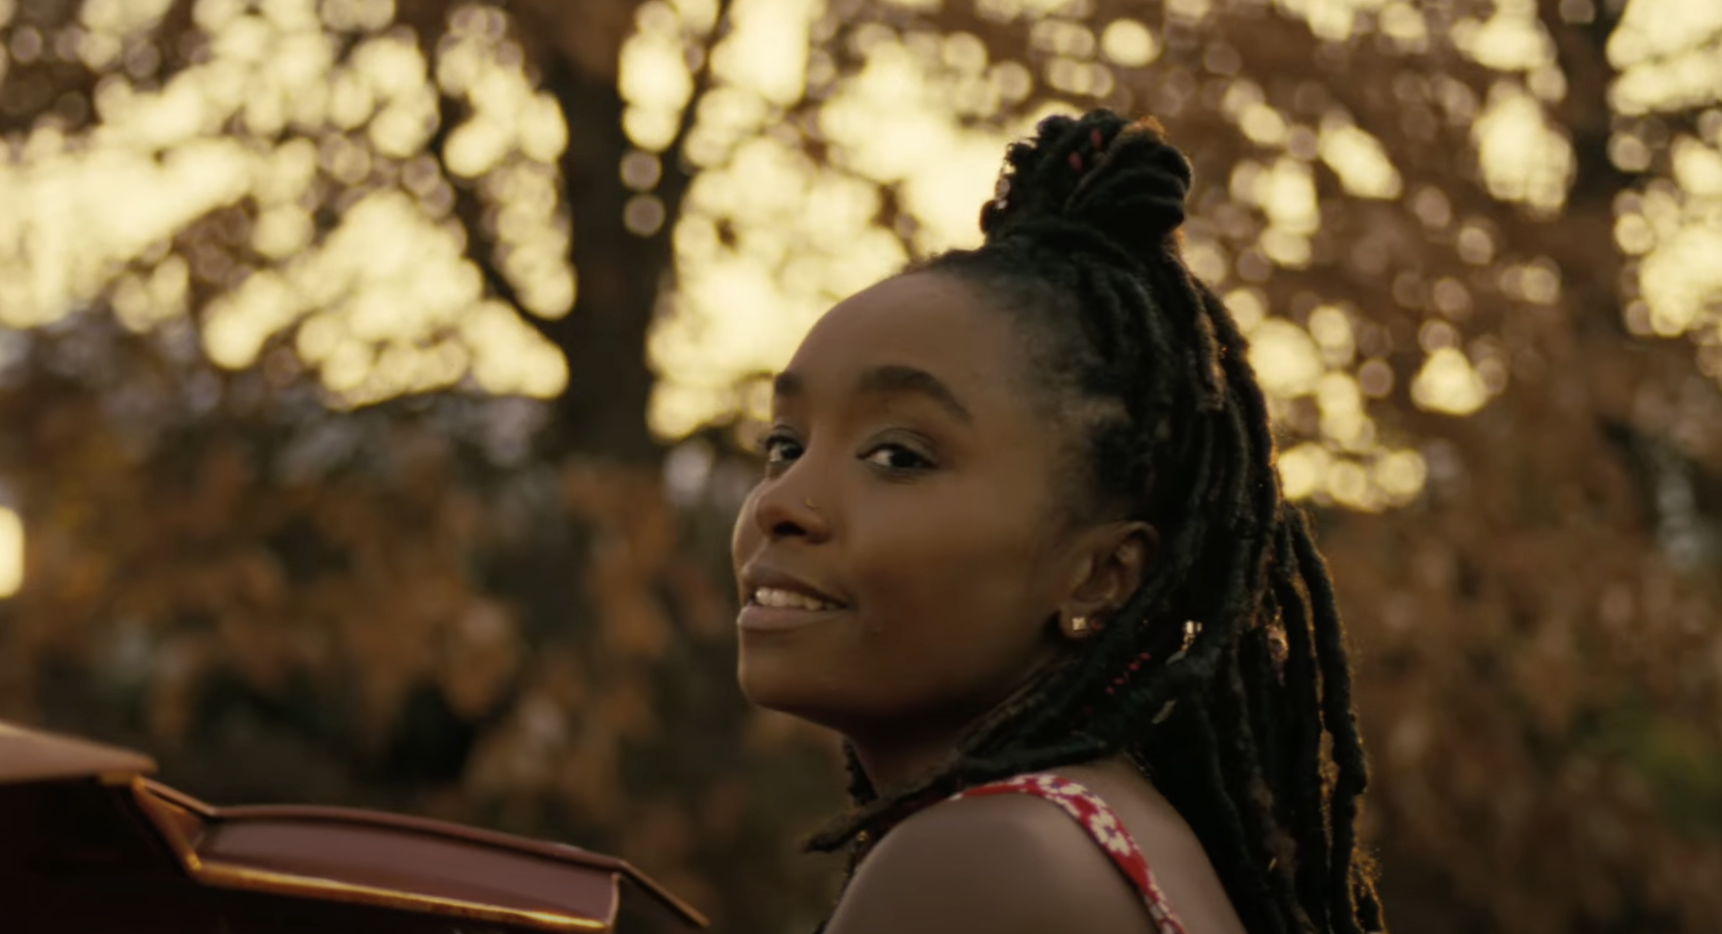 'Dandelion' Trailer: KiKi Layne Gets Musical As A Singer-Songwriter In New Trailer